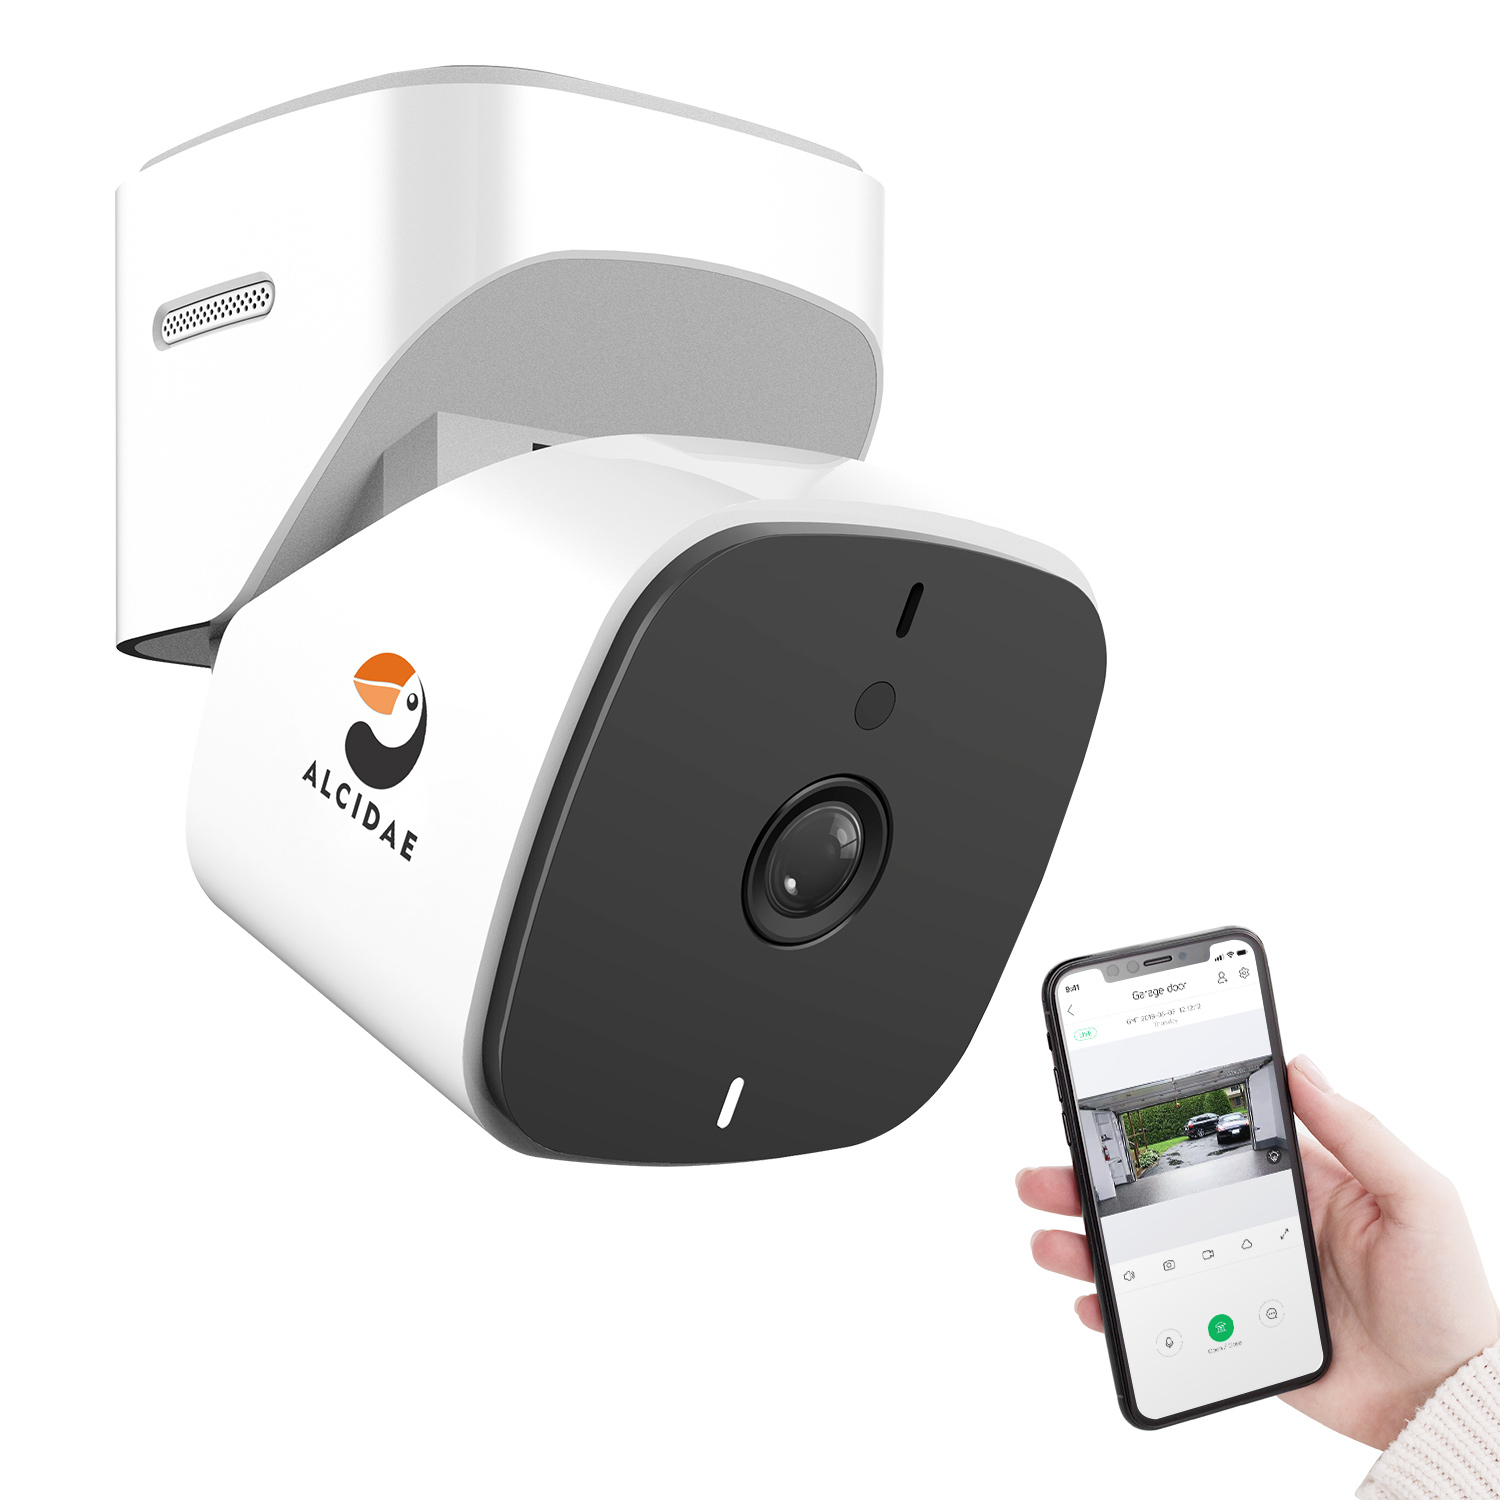 Alcidae Garager 2 All-in-One, Universal Smart Garage Door Controller and FHD Surveillance Camera